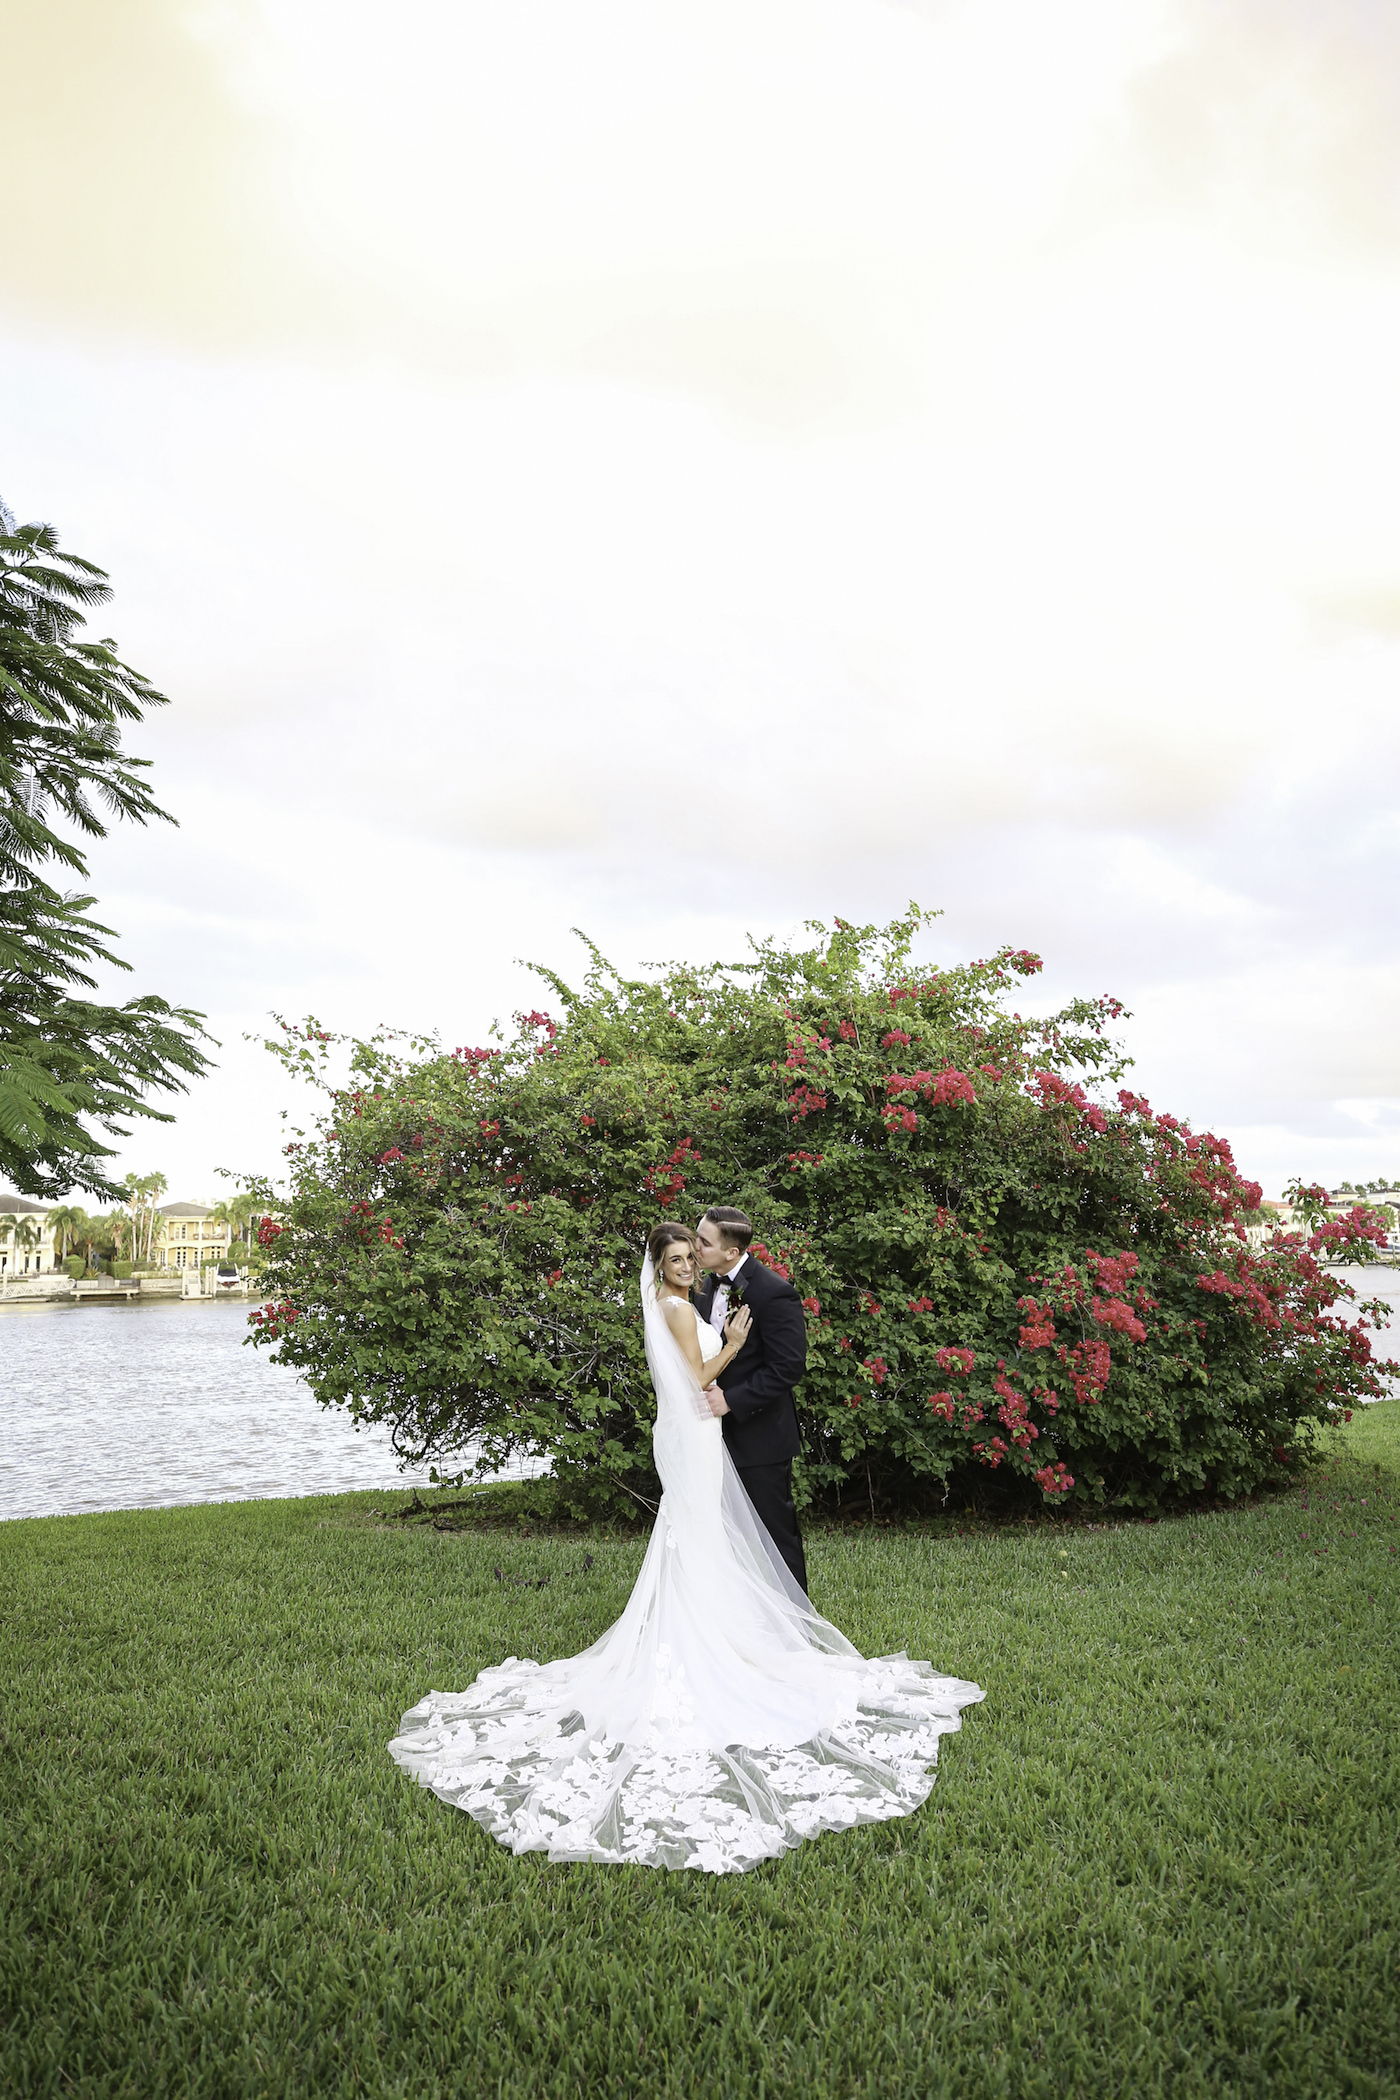 Outdoor Sunset Bride and Groom Wedding Portrait | Wedding Photographer Lifelong Photography Studio | Tampa Wedding Venue Davis Islands Garden Club